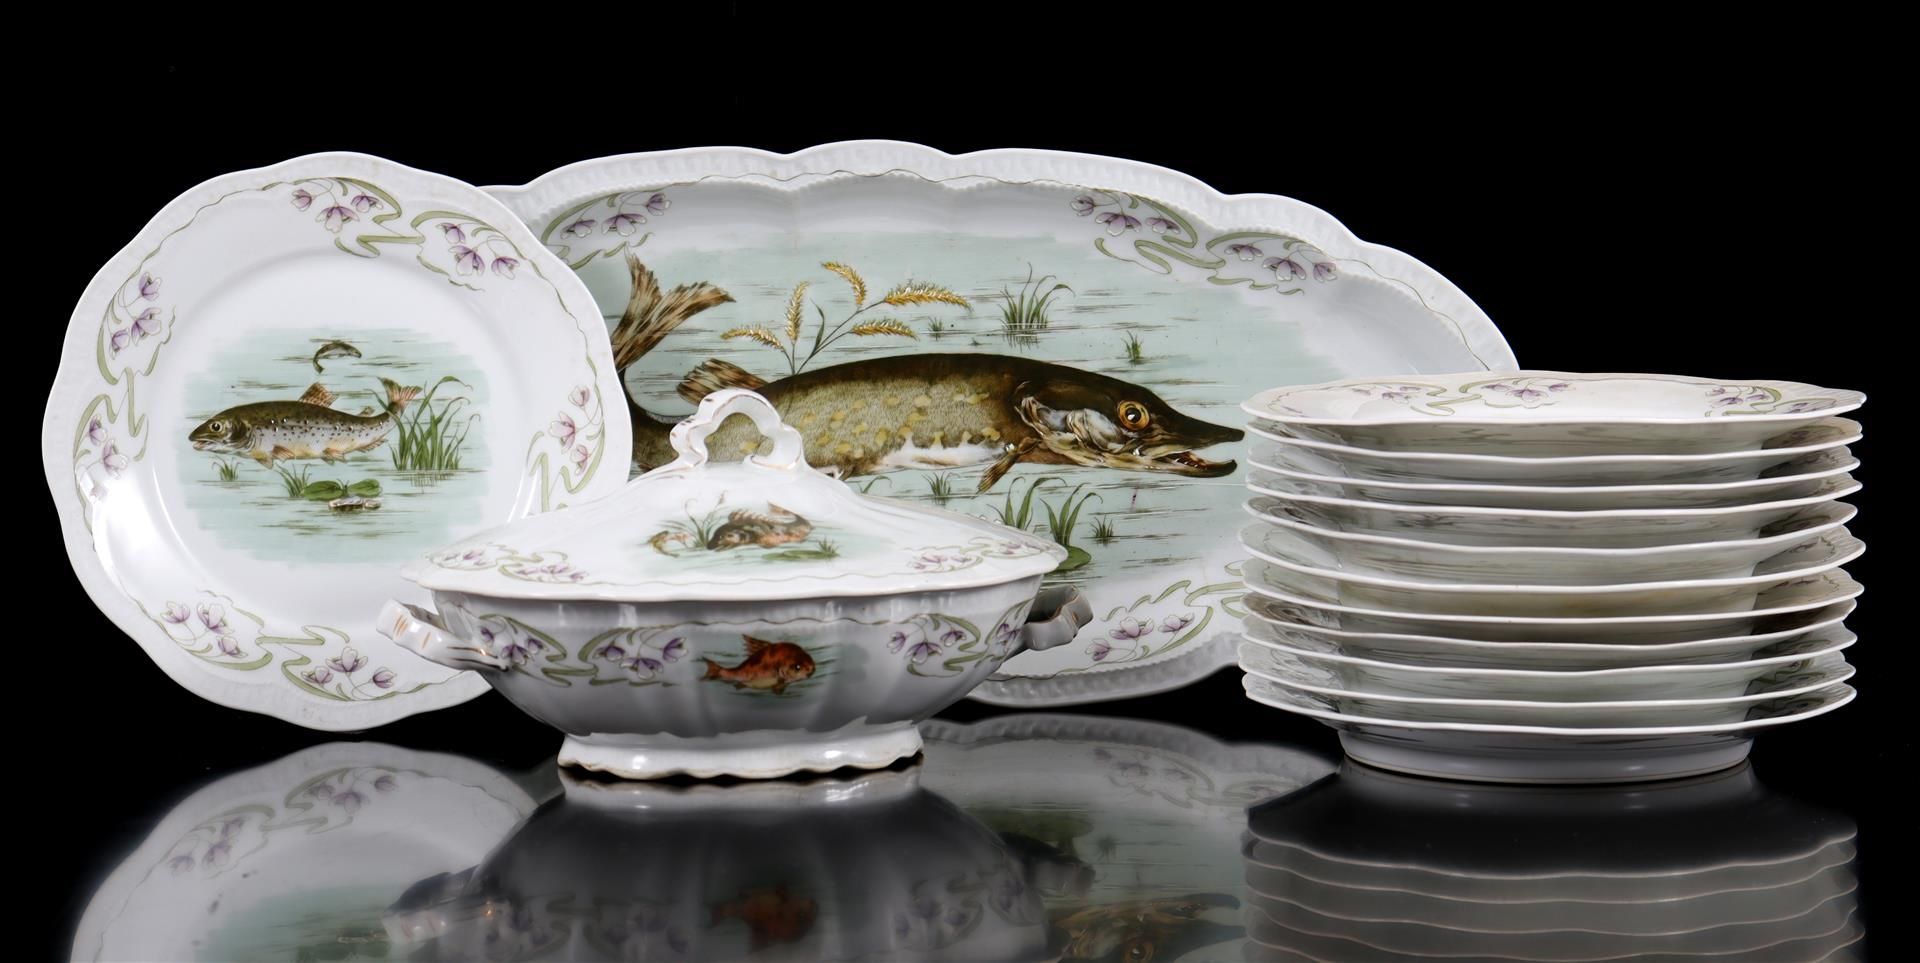 12 Orleans Z.S. & Co Bavaria porcelain plates